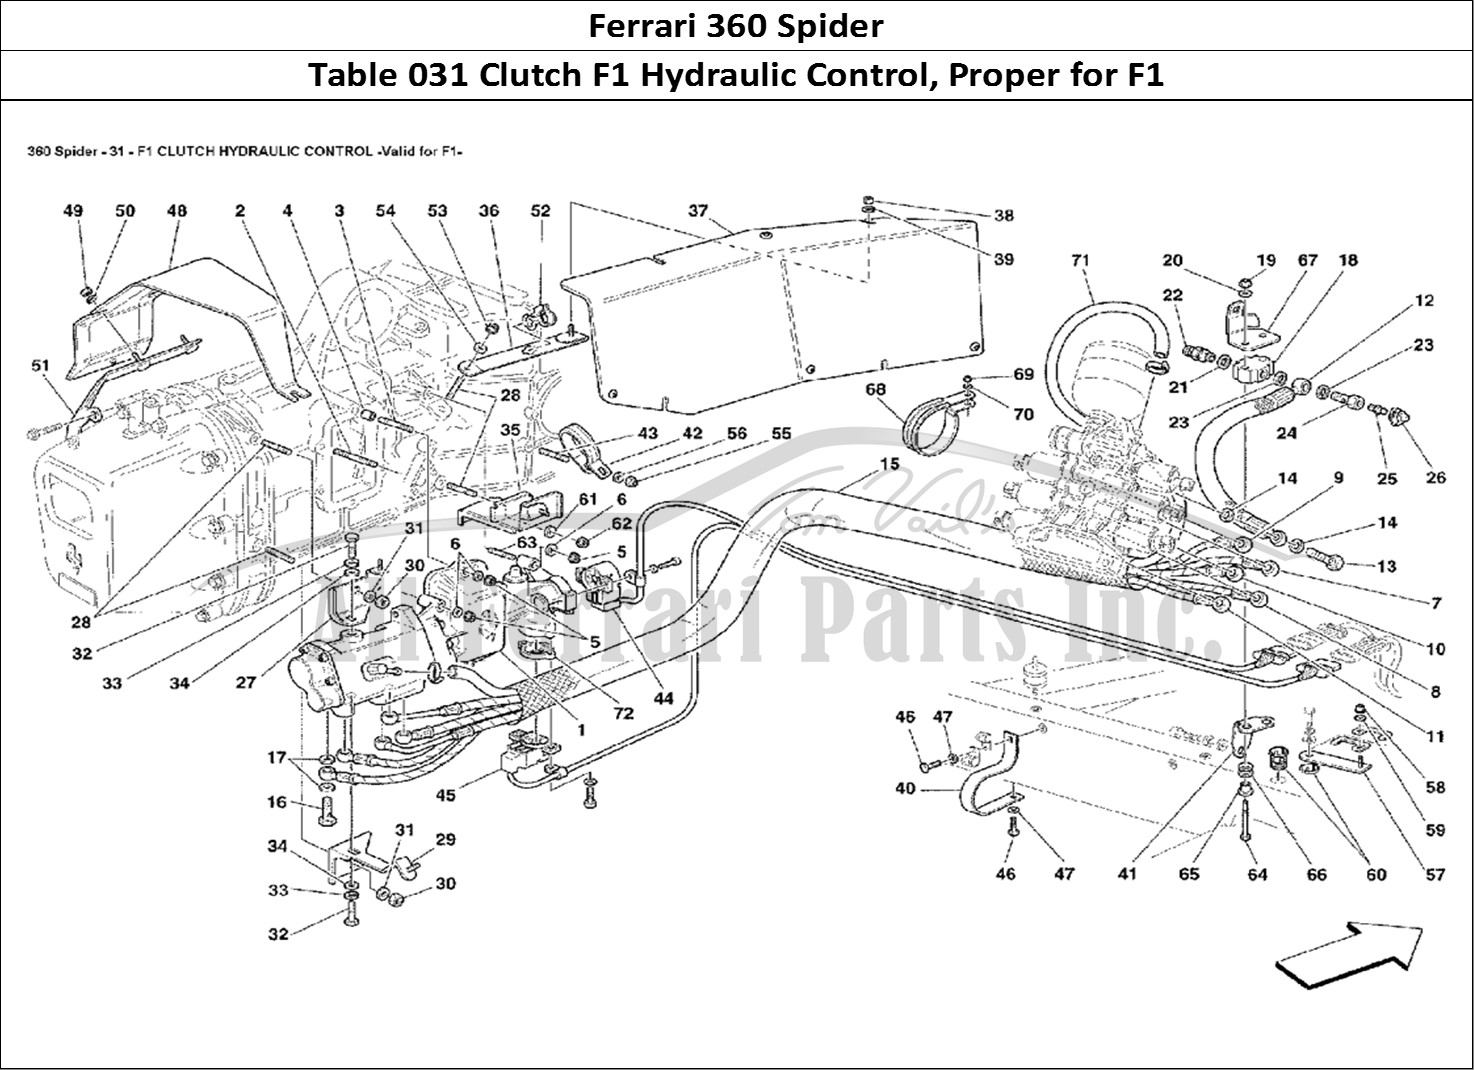 Ferrari Parts Ferrari 360 Spider Page 031 F1 Clutch Hydraulic Contr